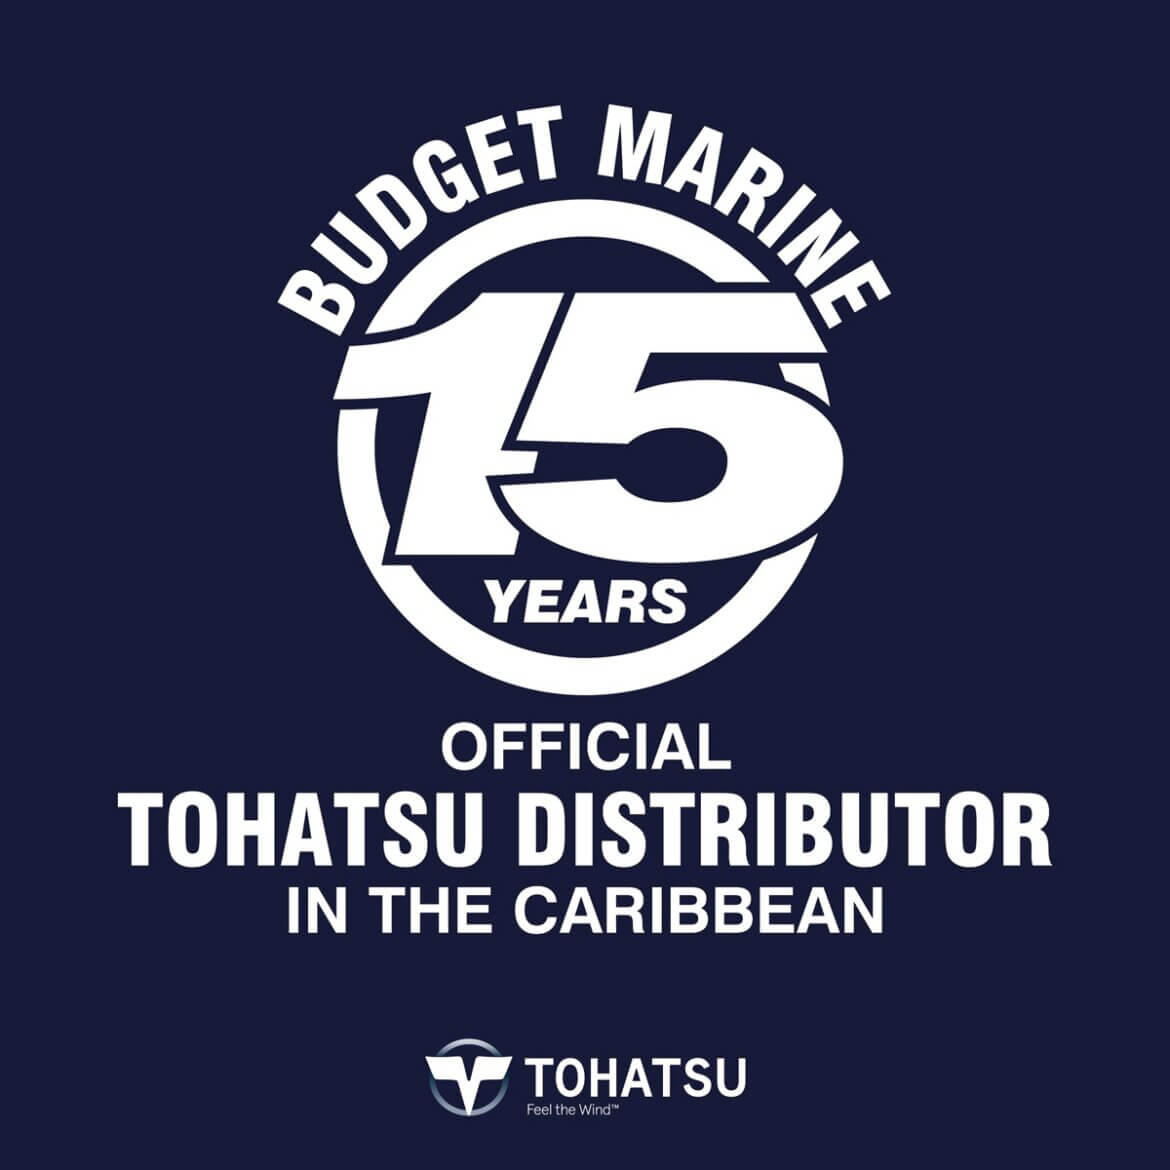 Budget Marine Antigua - North Sound 13